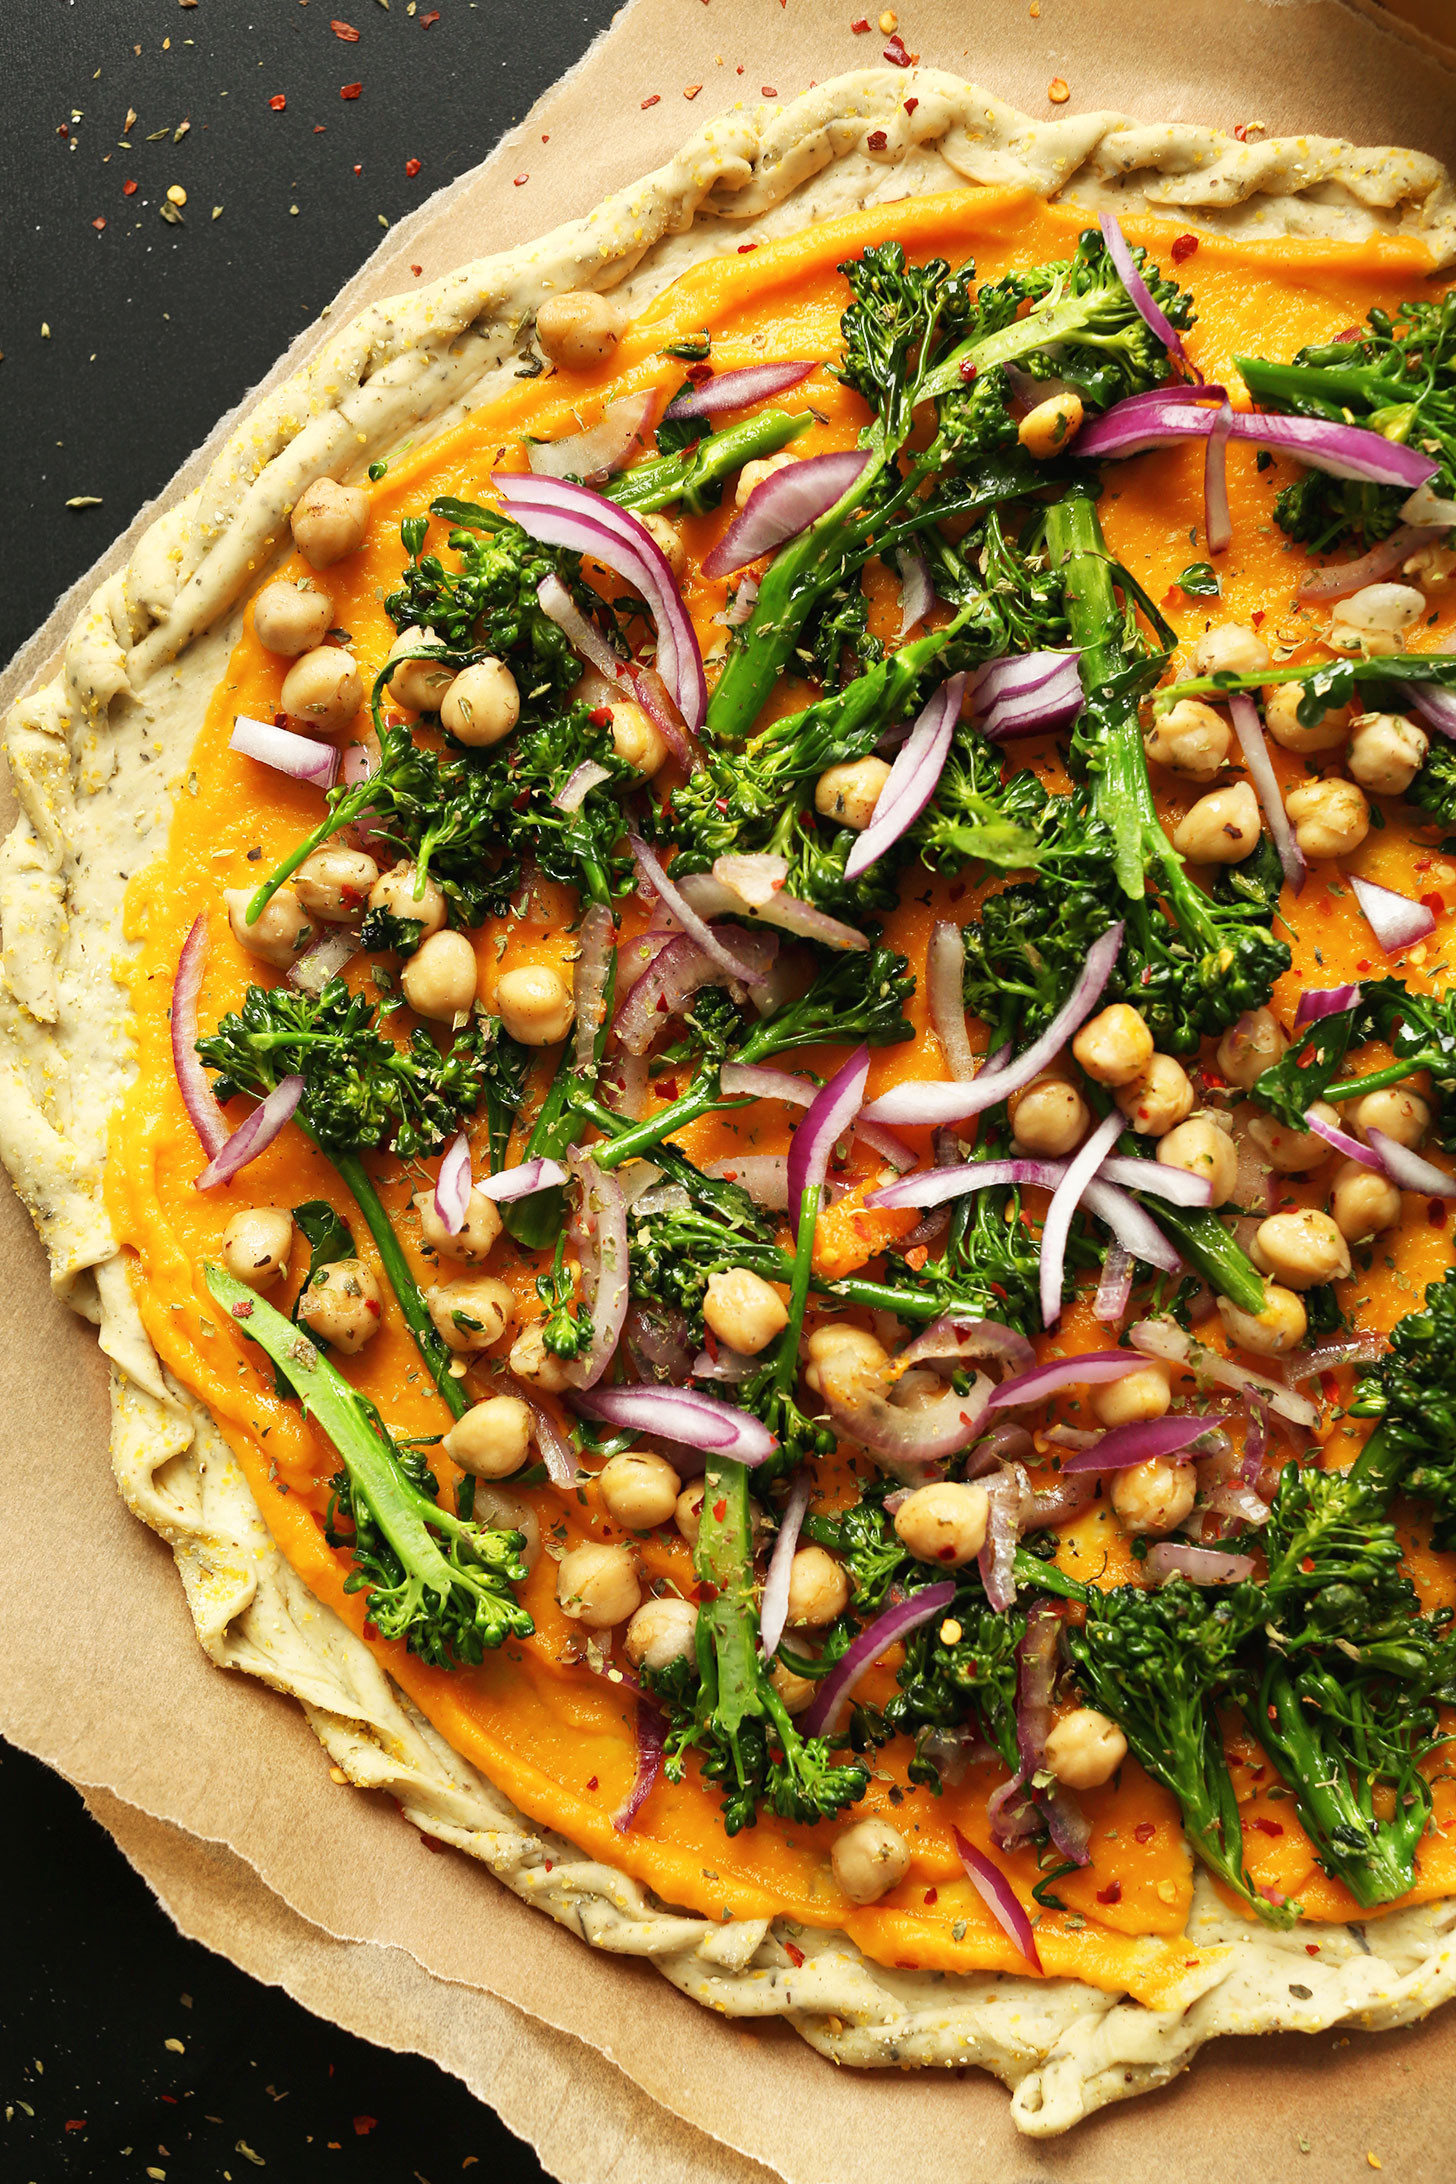 Delicious Healthy Vegan Recipes
 30 delicious vegan dinner recipes for happy tummies